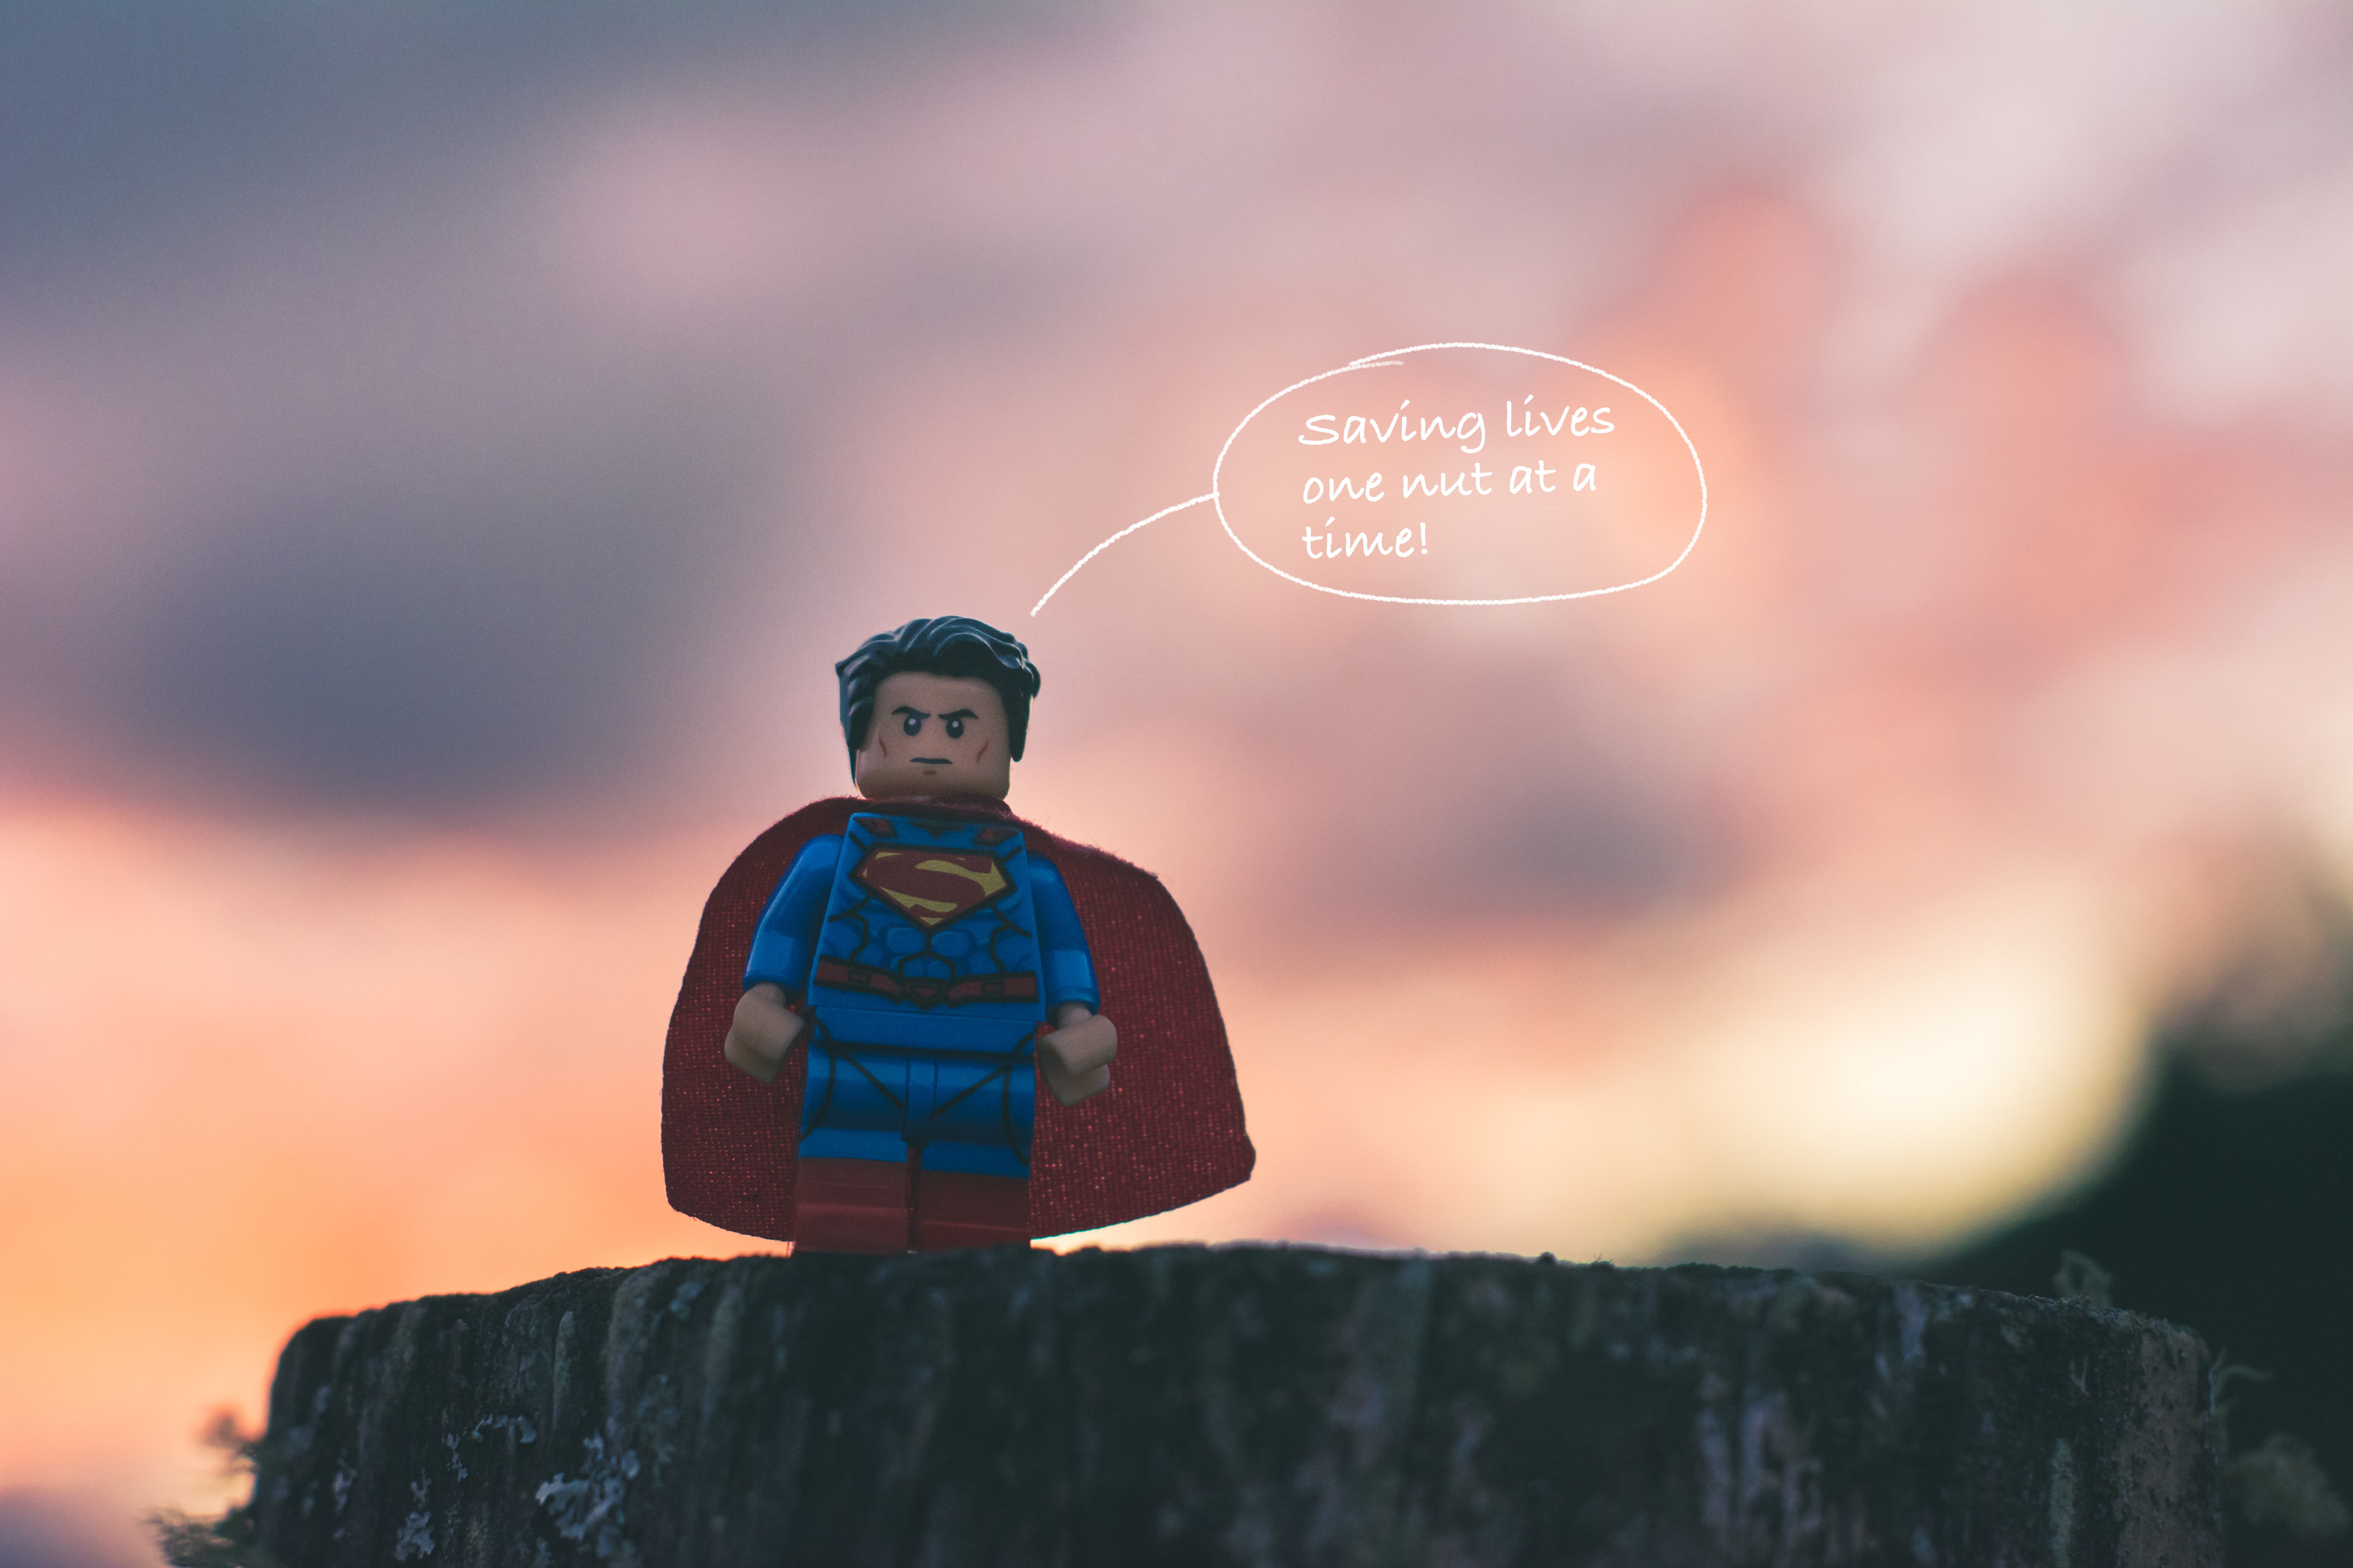 Superman image